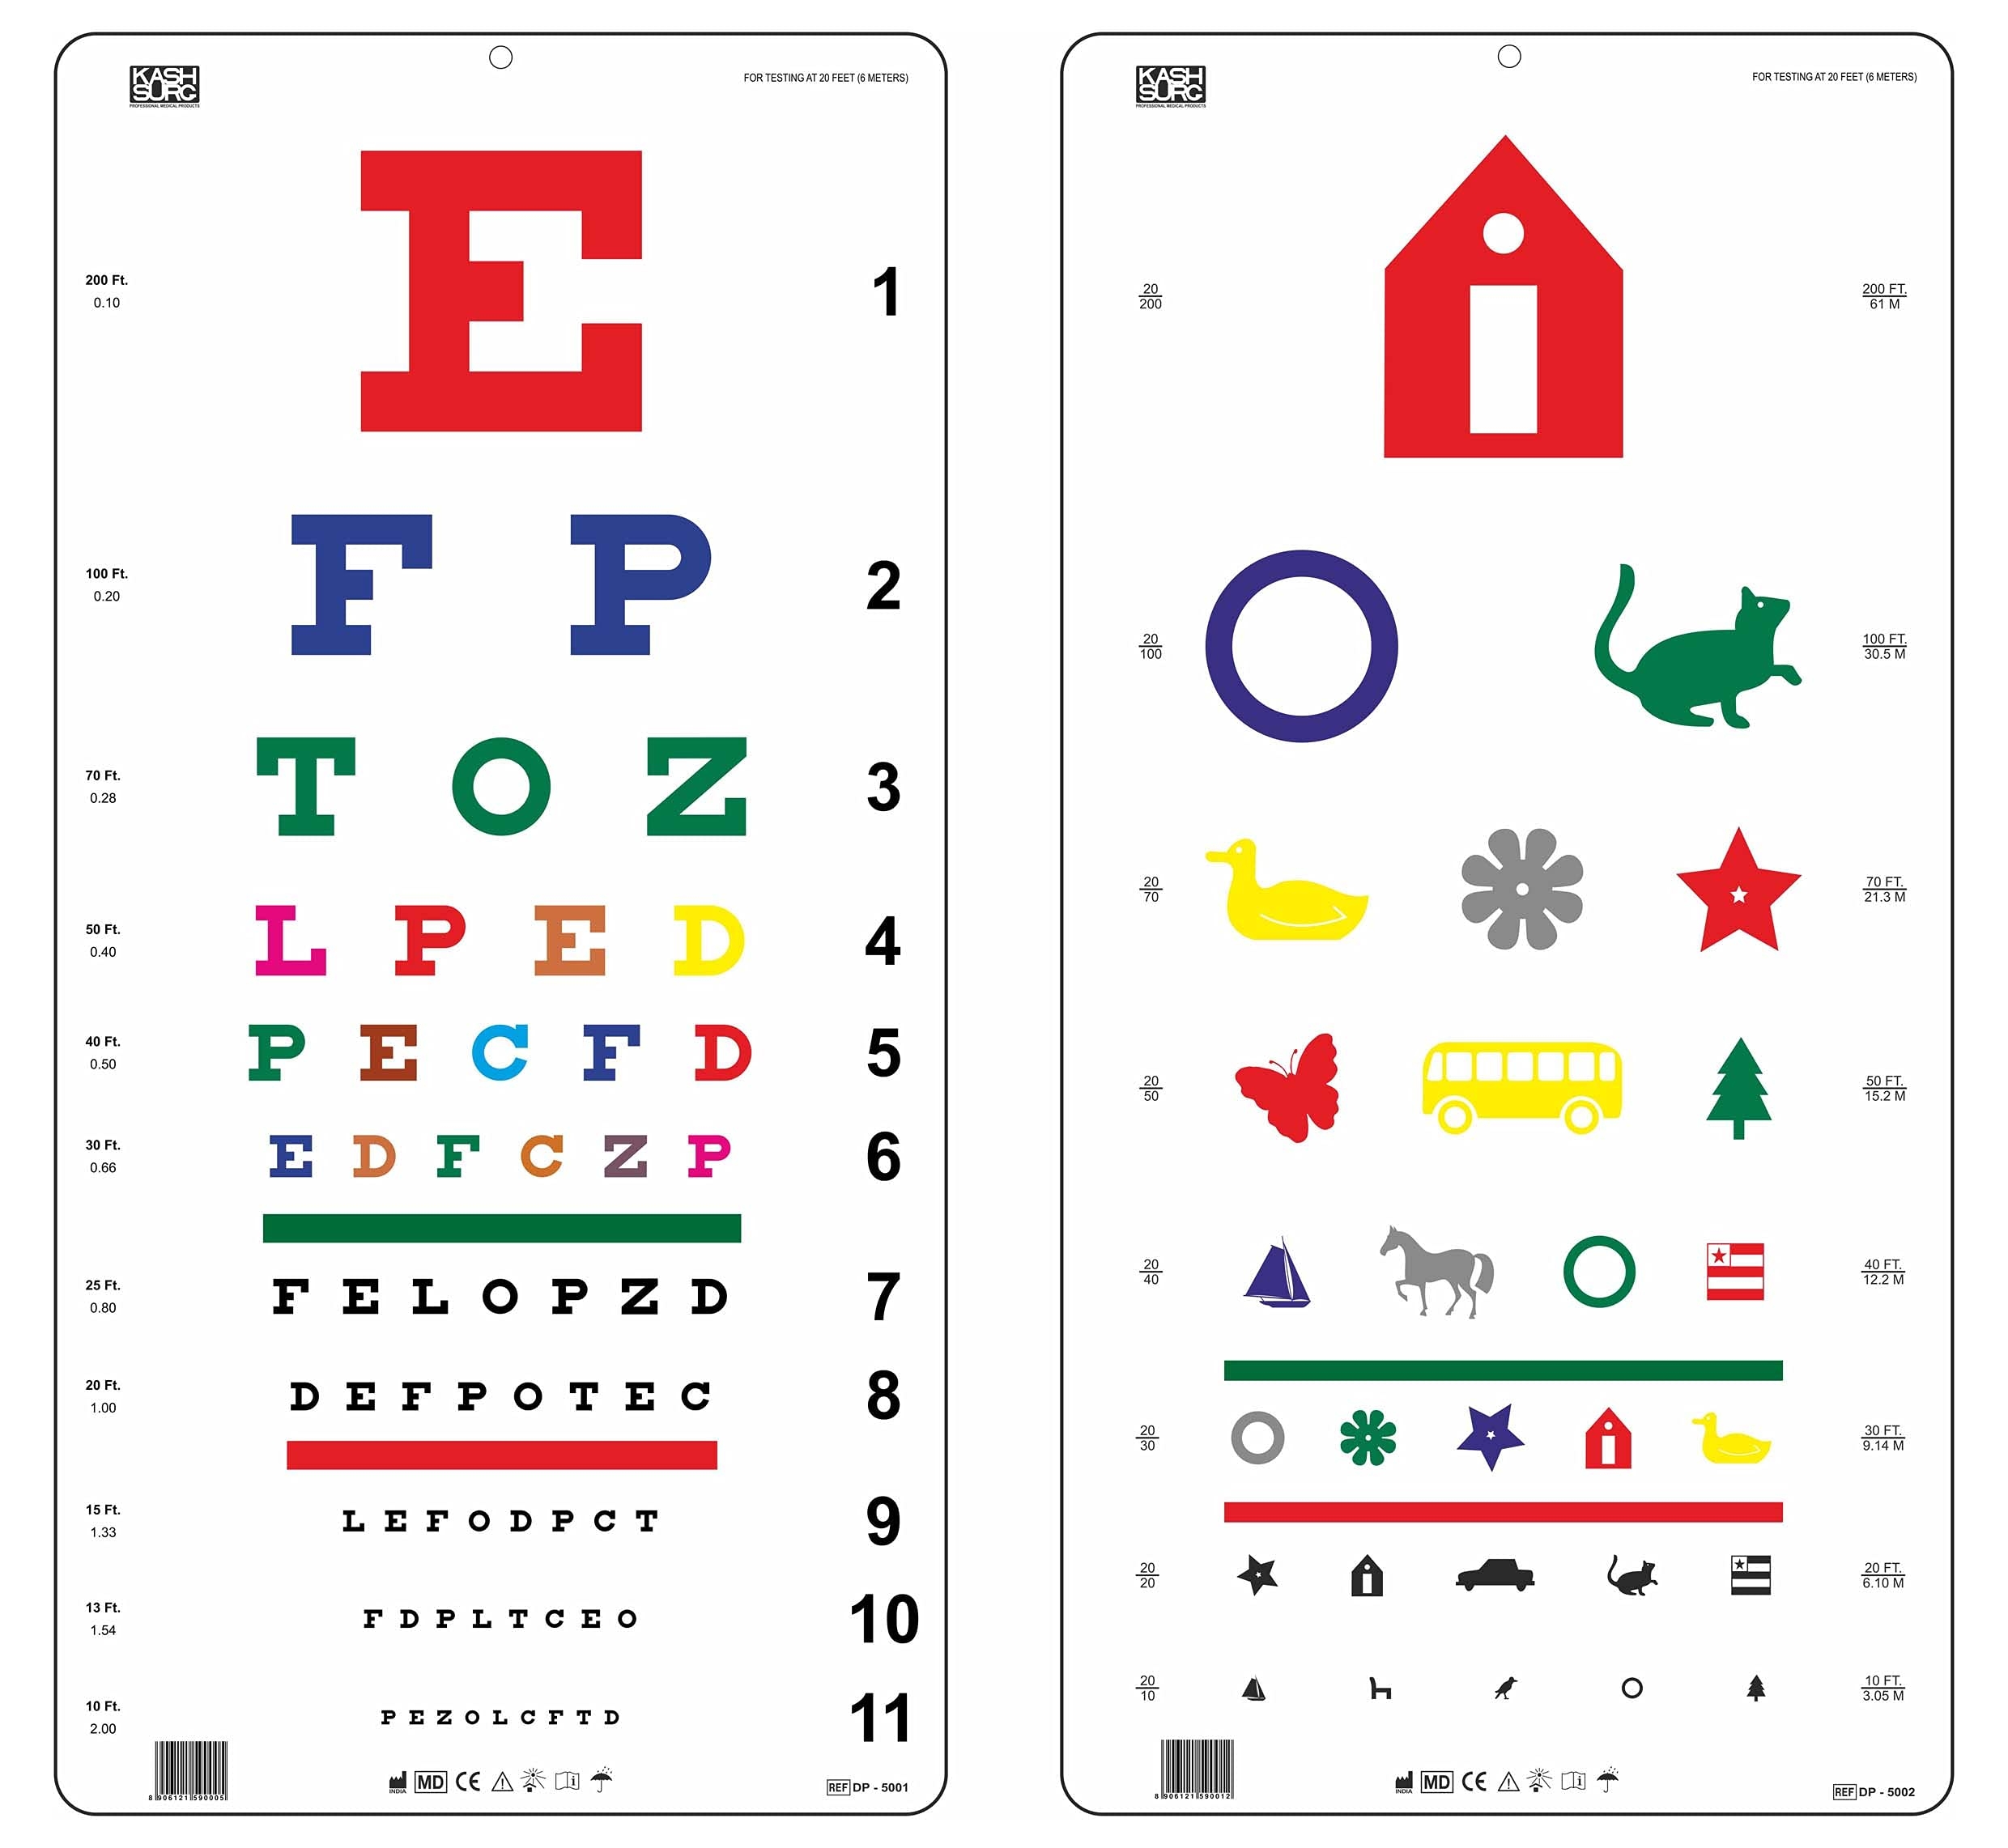 Amazon Traditional Snellen Color Kindergarten Color Distance Vision Eye Chart 20 Feet 22 X 11 Inch Industrial Scientific